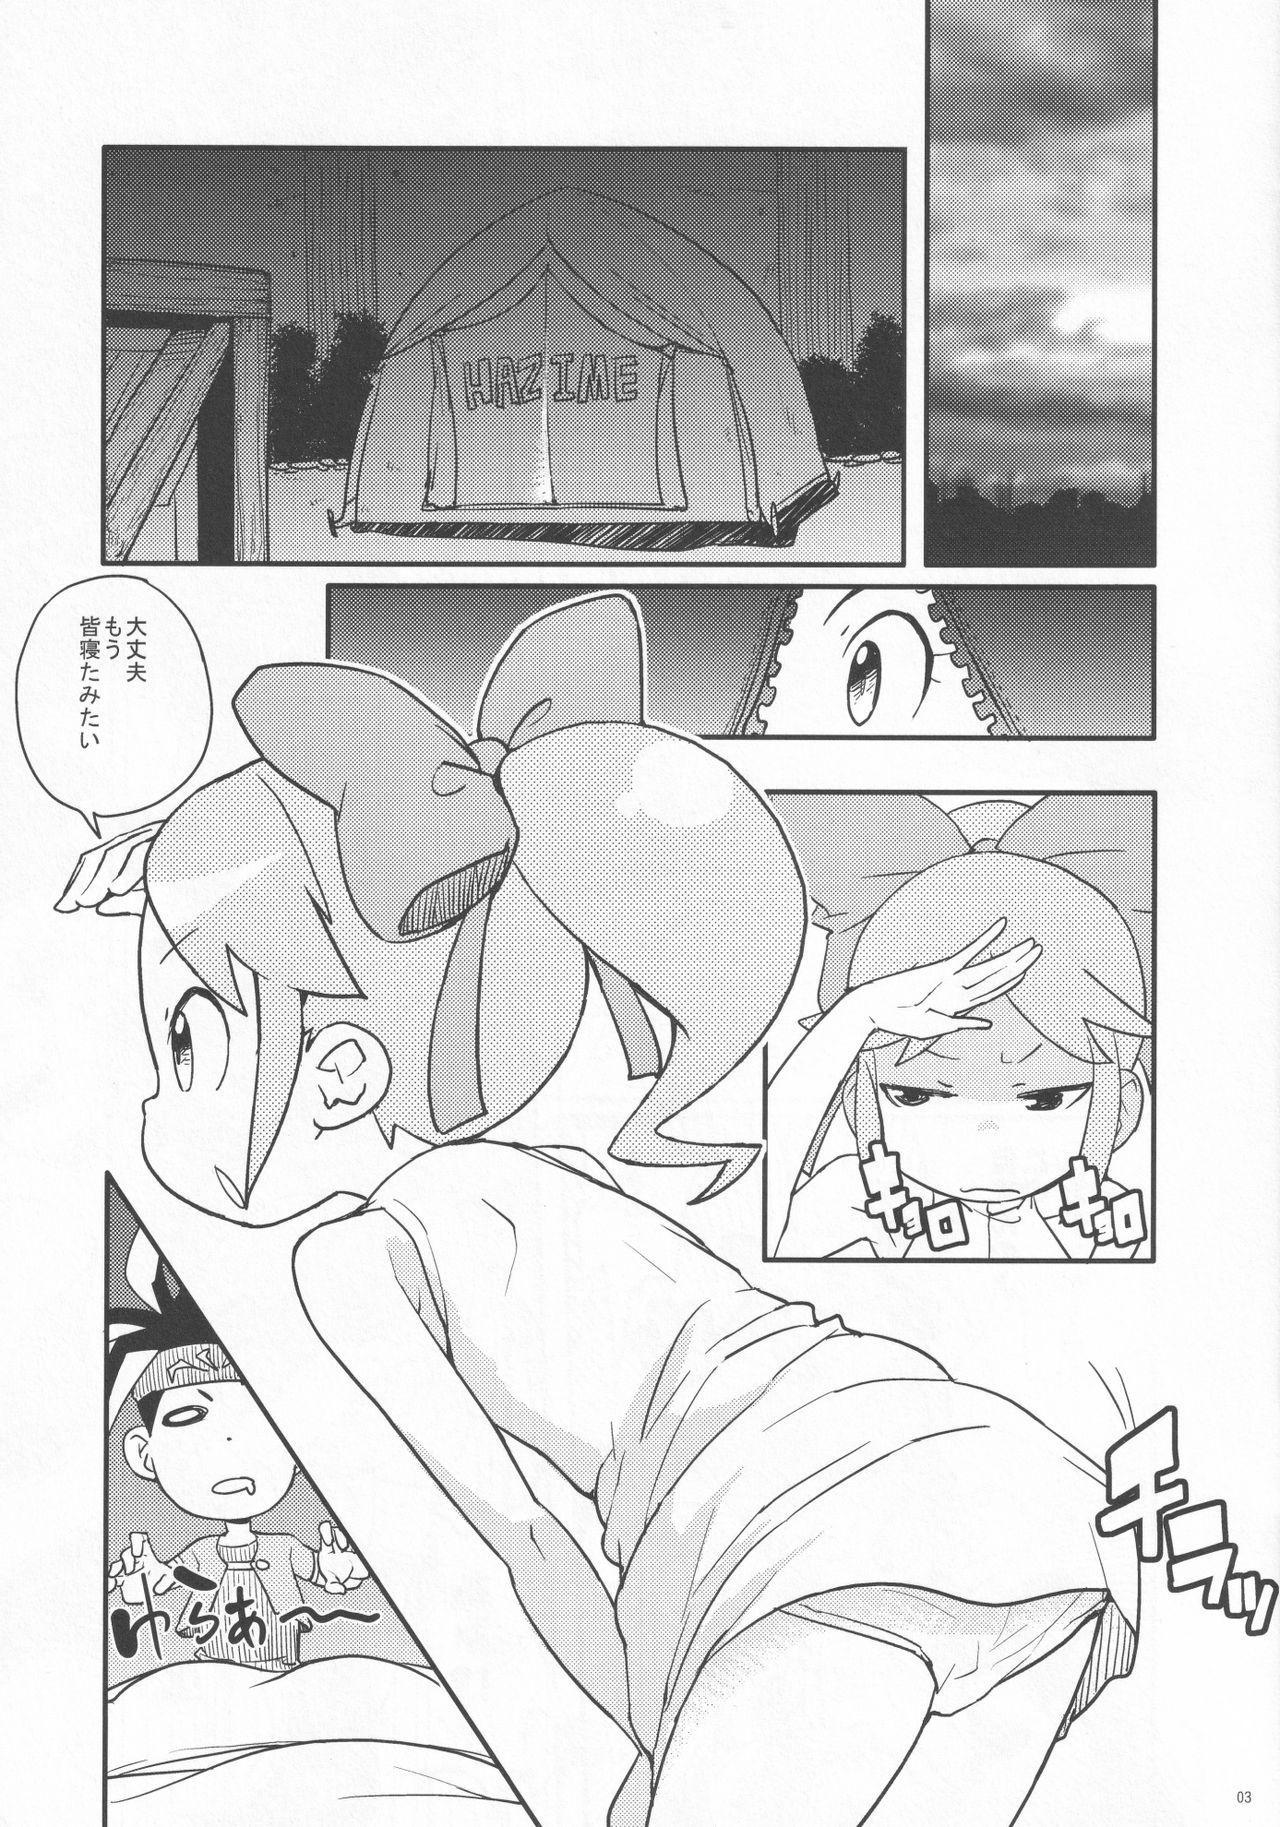 Les Kimari Matsuri 2 - Battle spirits Perverted - Page 2